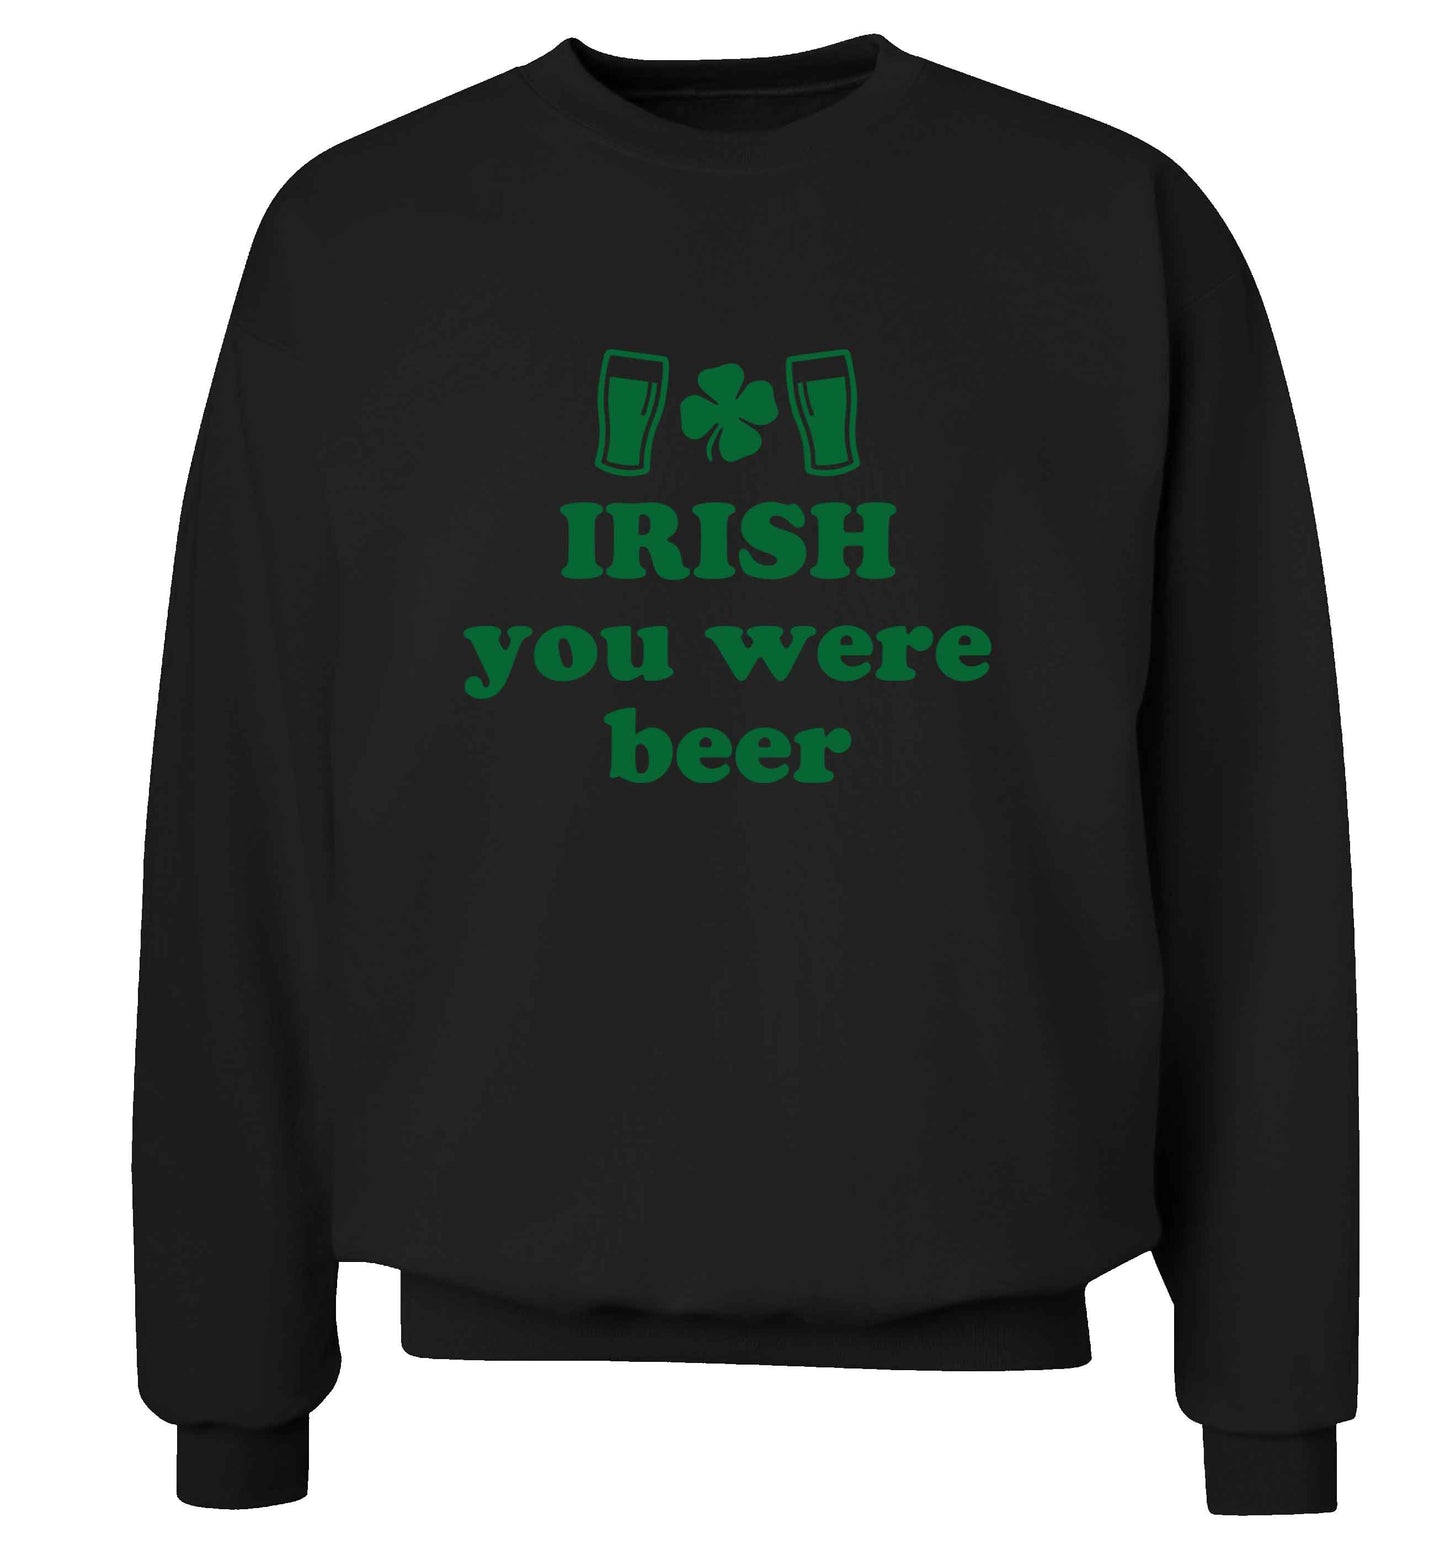 Irish you were beer adult's unisex black sweater 2XL